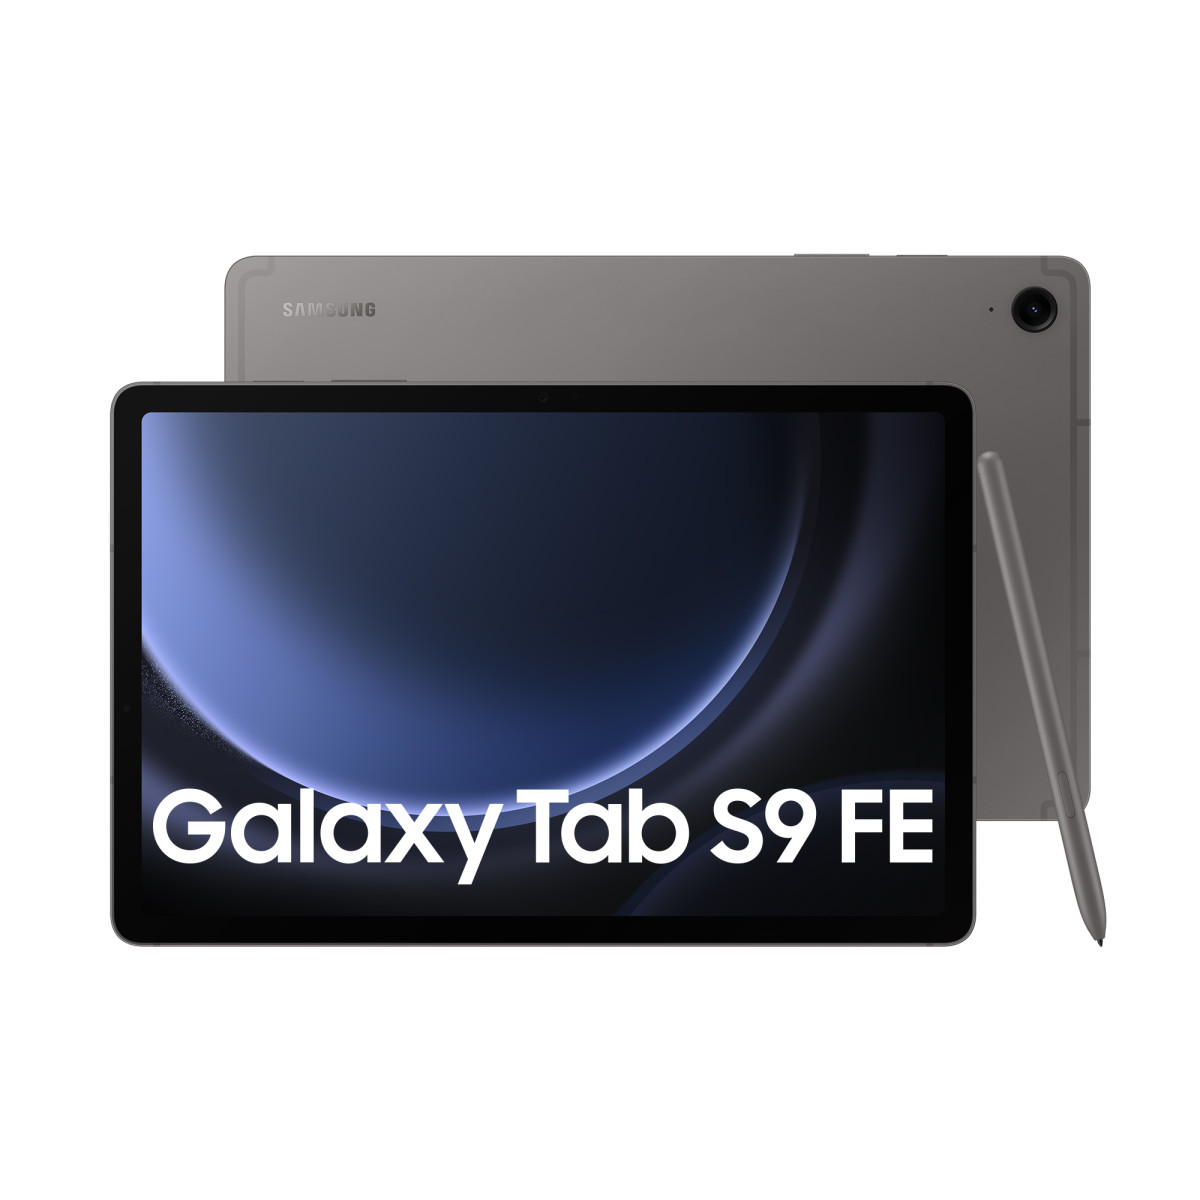 Galaxy Tab S9 FE 256GB Gray 5G